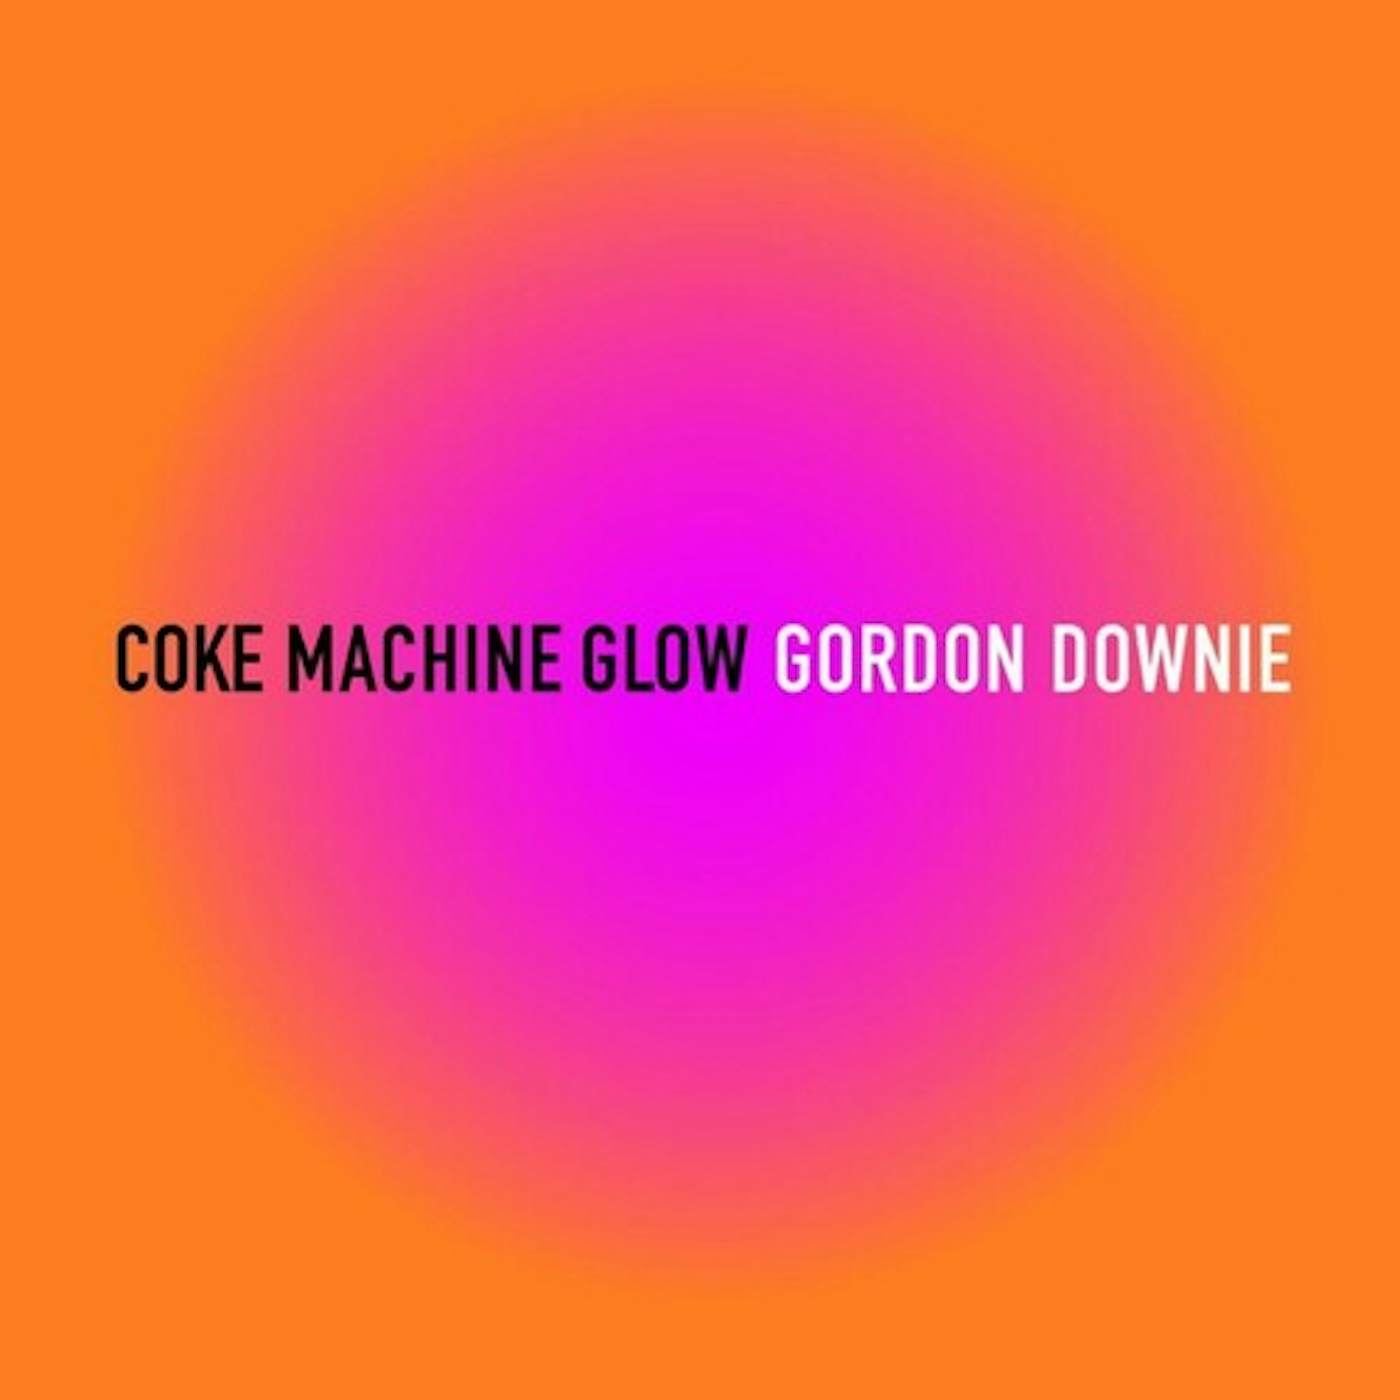 Gord Downie Coke Machine Glow Vinyl Record